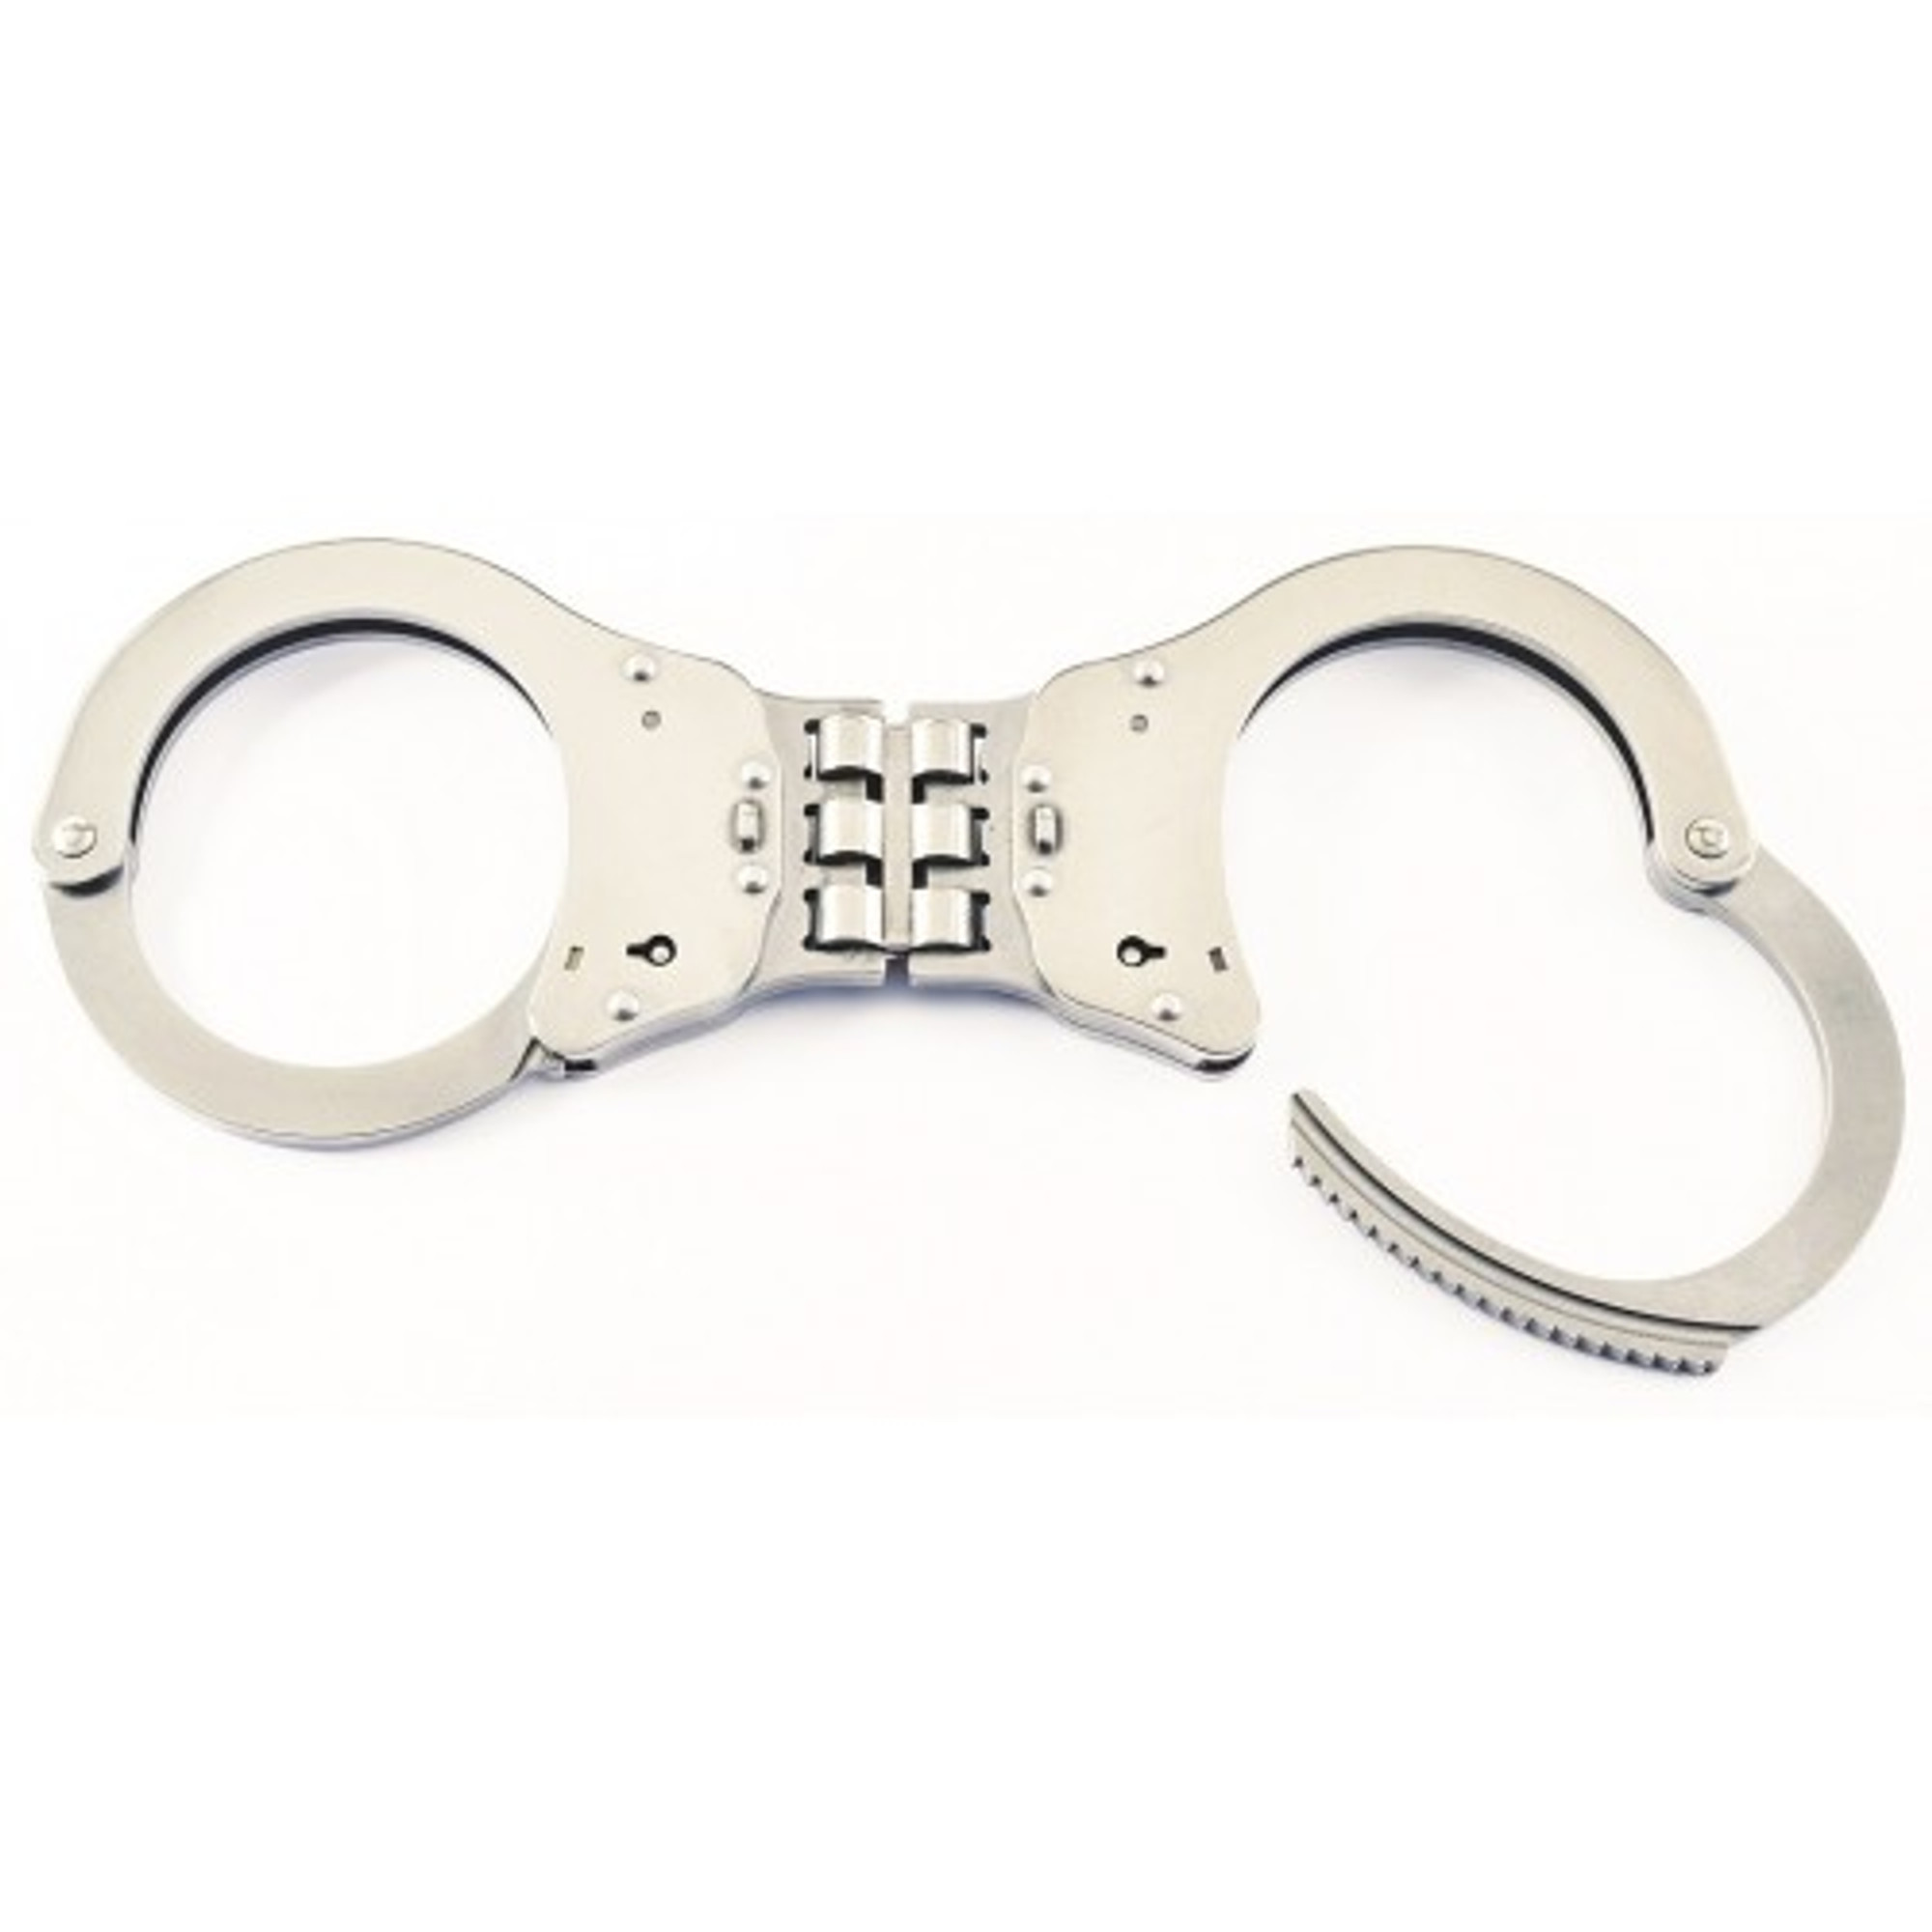 RUKO G-222H3,  420J2 Stainless Steel NIJ Approved handcuffs